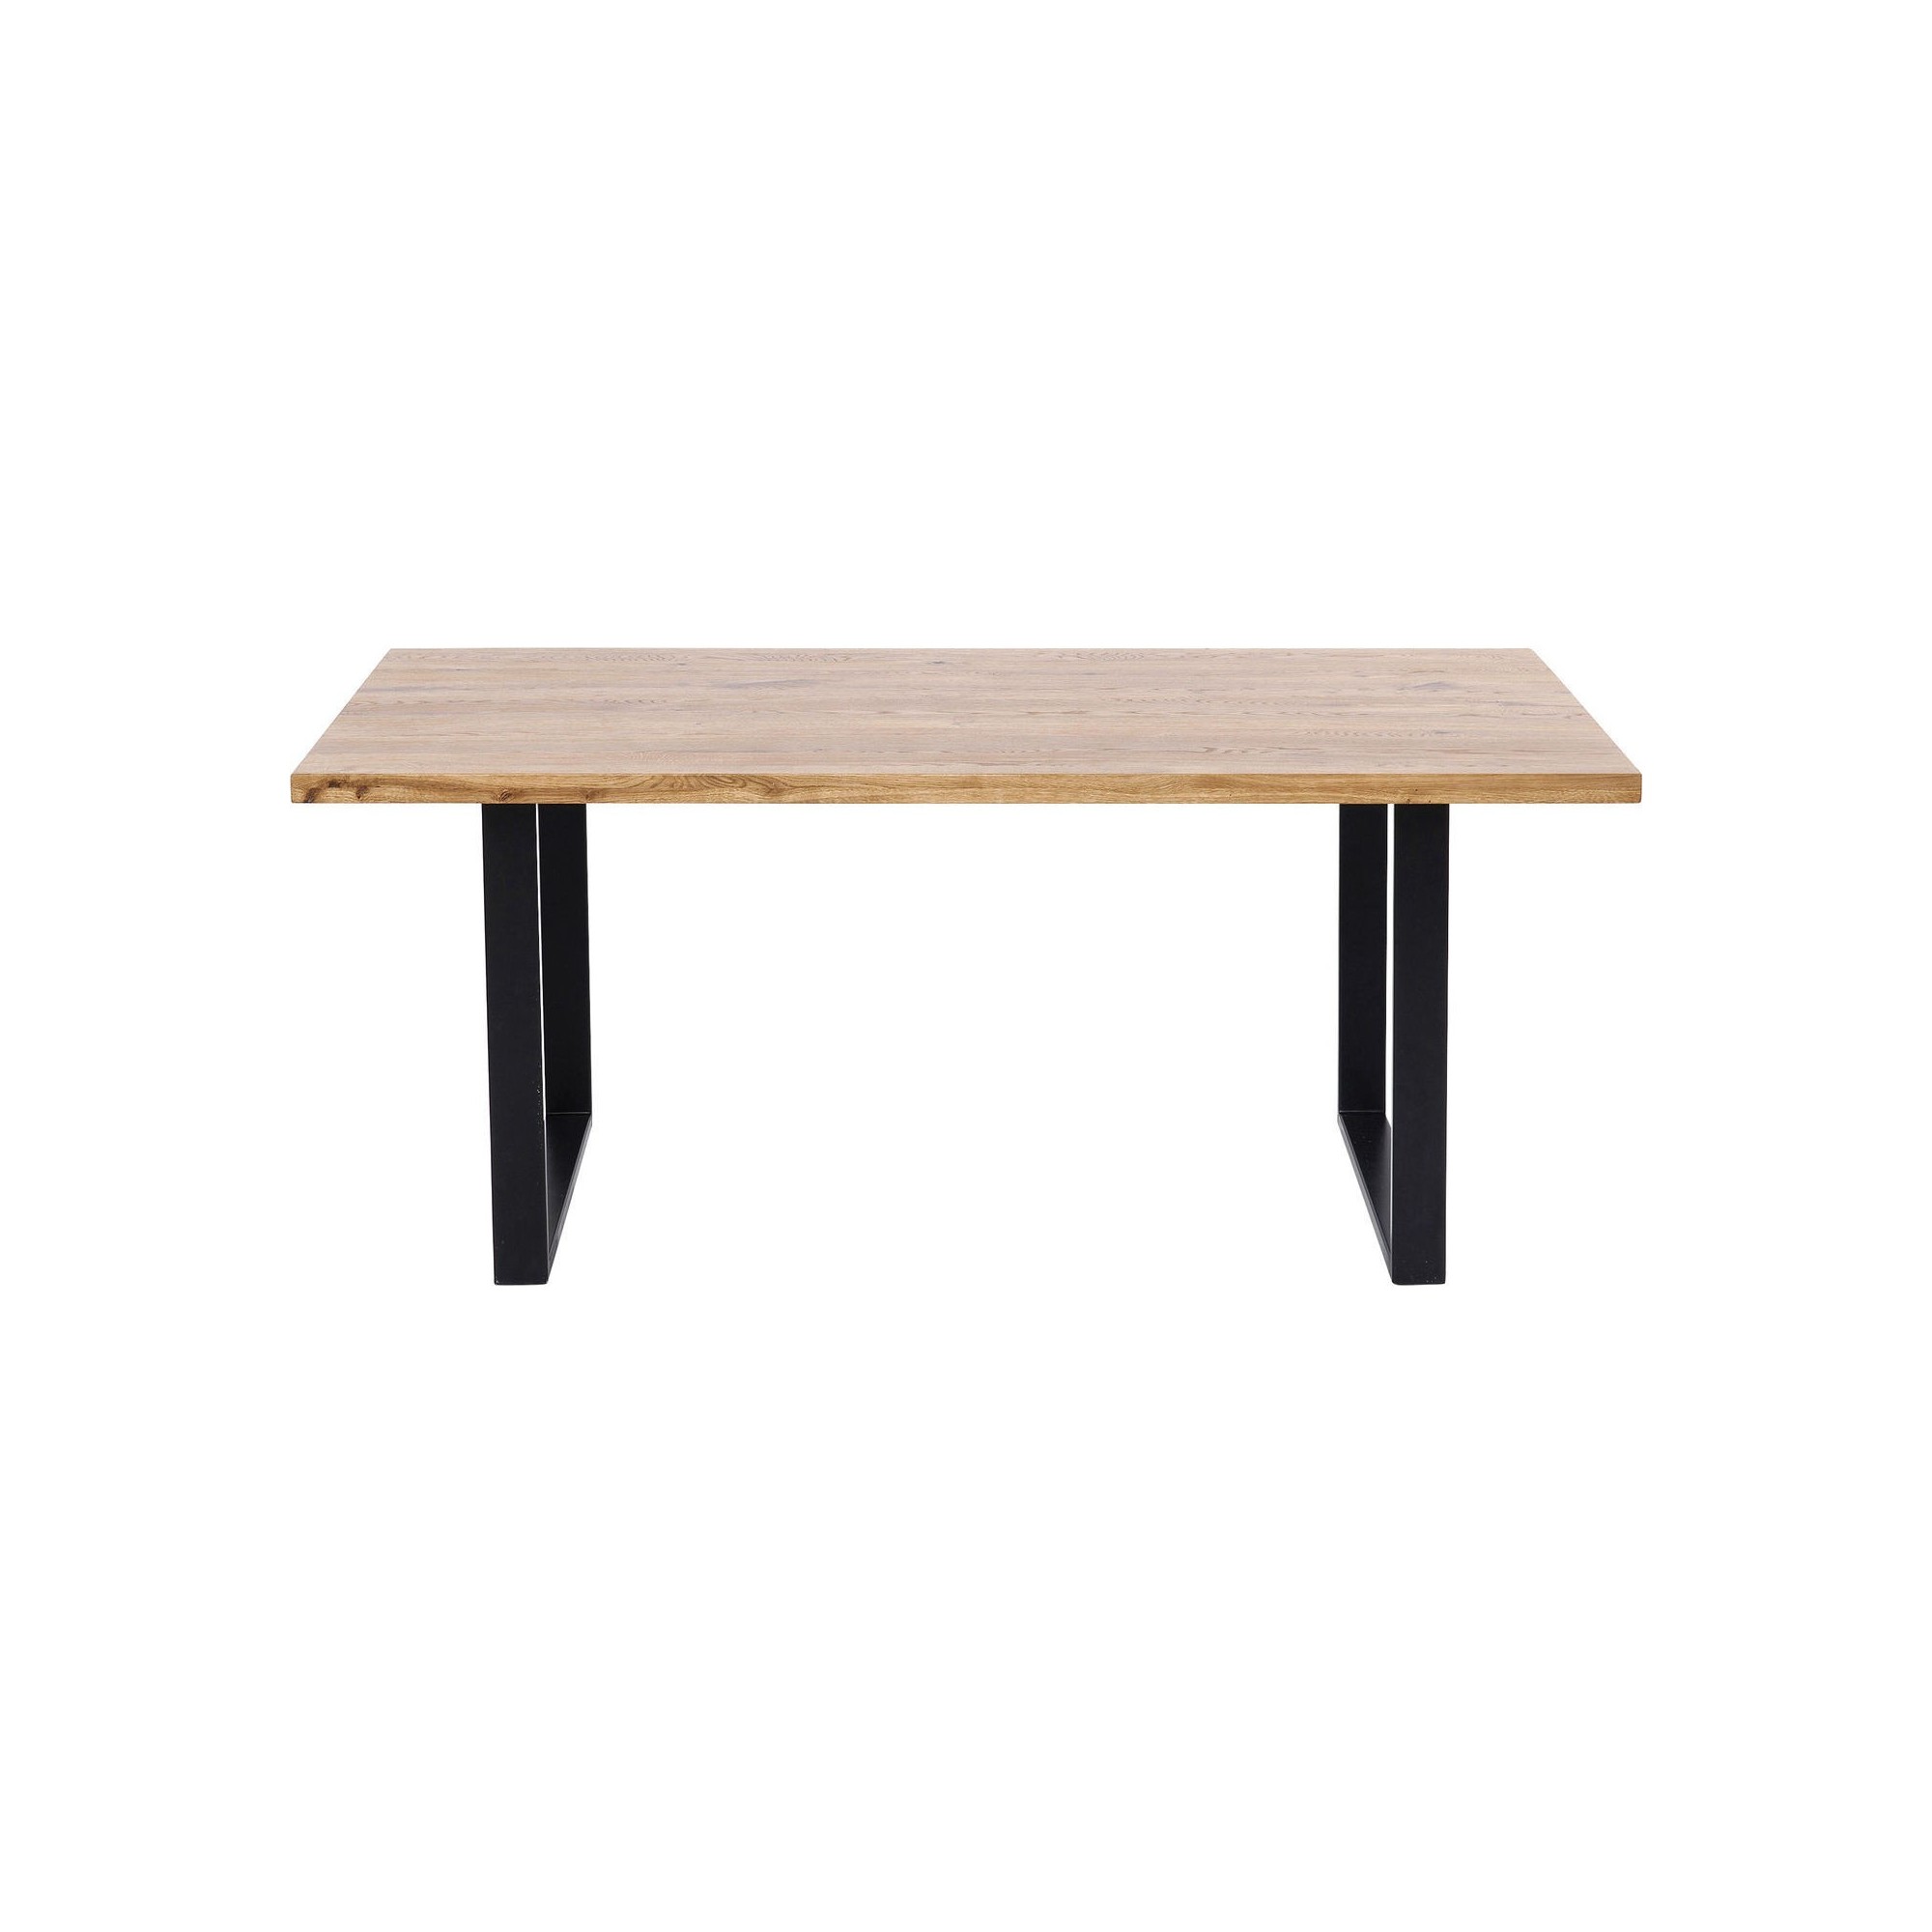 Table Jackie chêne noire 180x90cm Kare Design